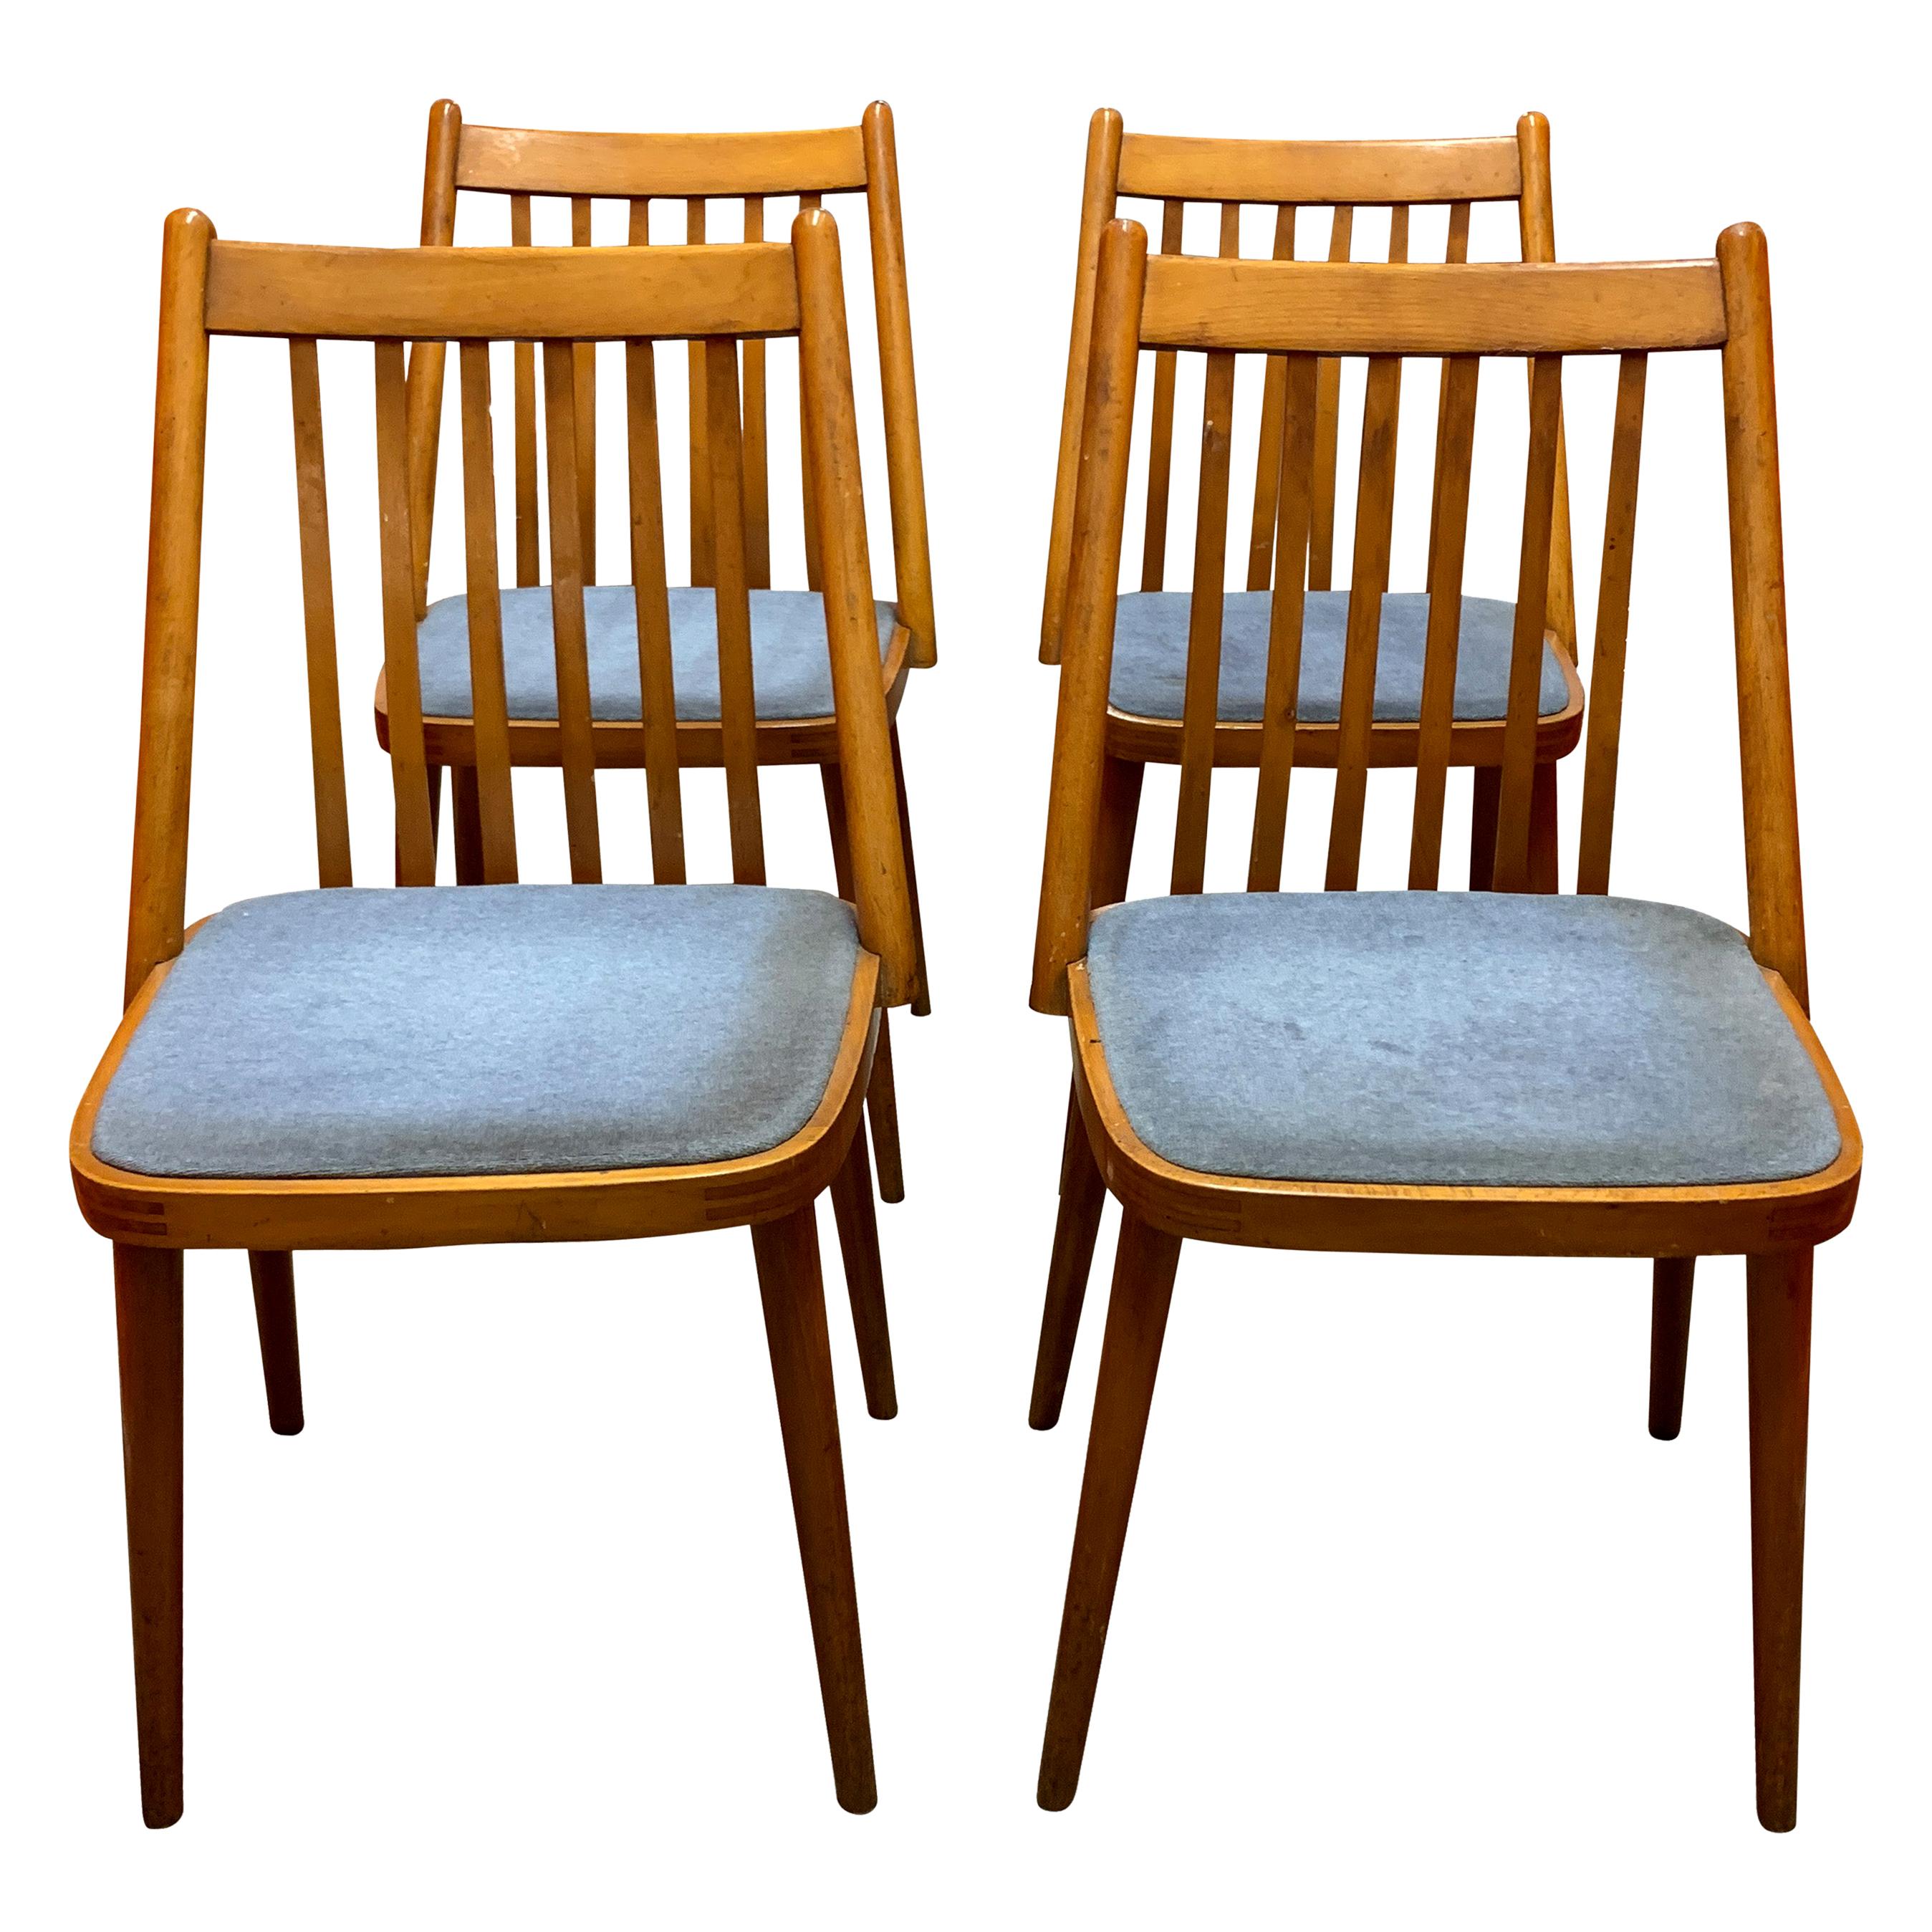 Set of 4 Midcentury Danish Dining Chairs